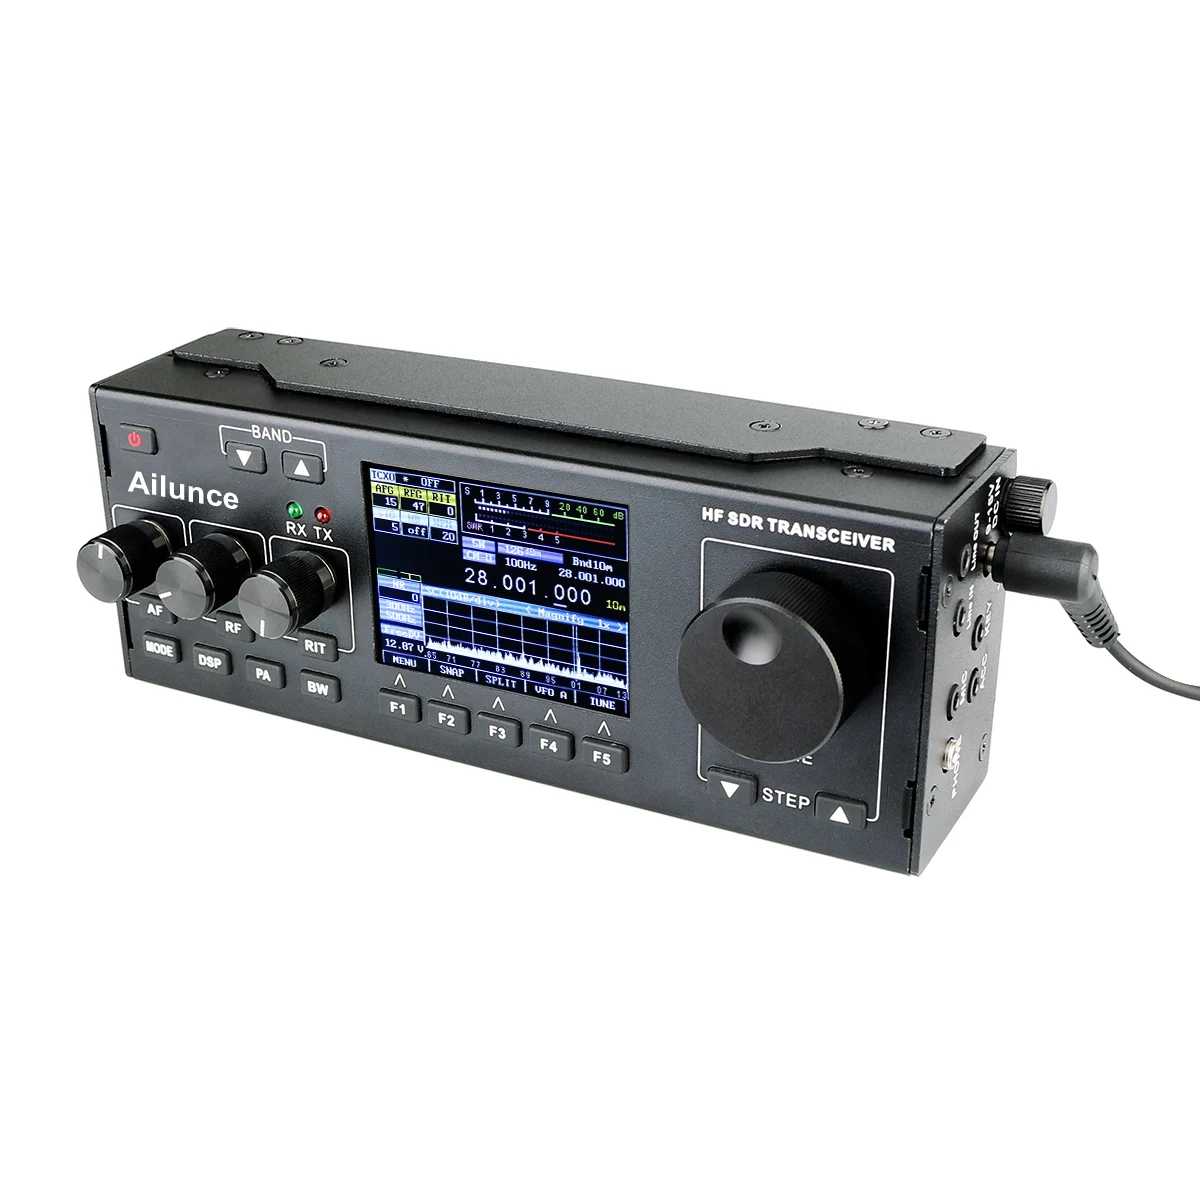 Ailunce HS1 15W HF SDR Transceiver Short Wave Radio mini compact transceiver Digital Signal Noise Reduction transceiver Cheap